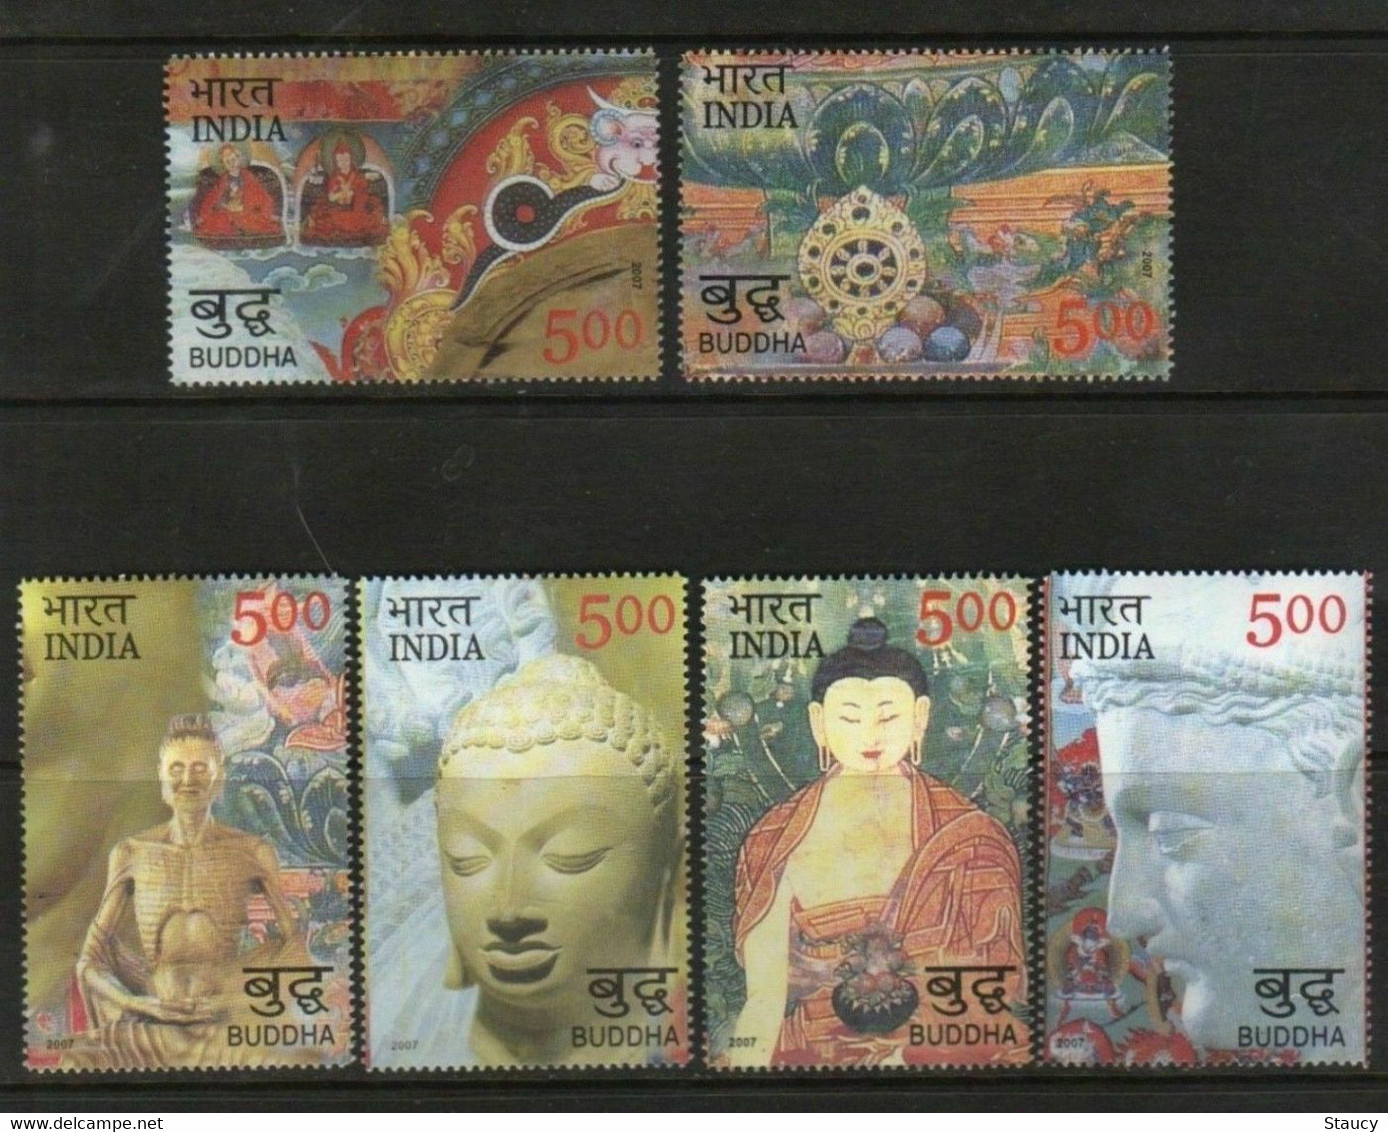 INDIA 2007 2550 YEARS OF MAHAPARINIRVANA OF THE BUDDHA 6v SET MNH, P.O Fresh & Fine - Incisioni